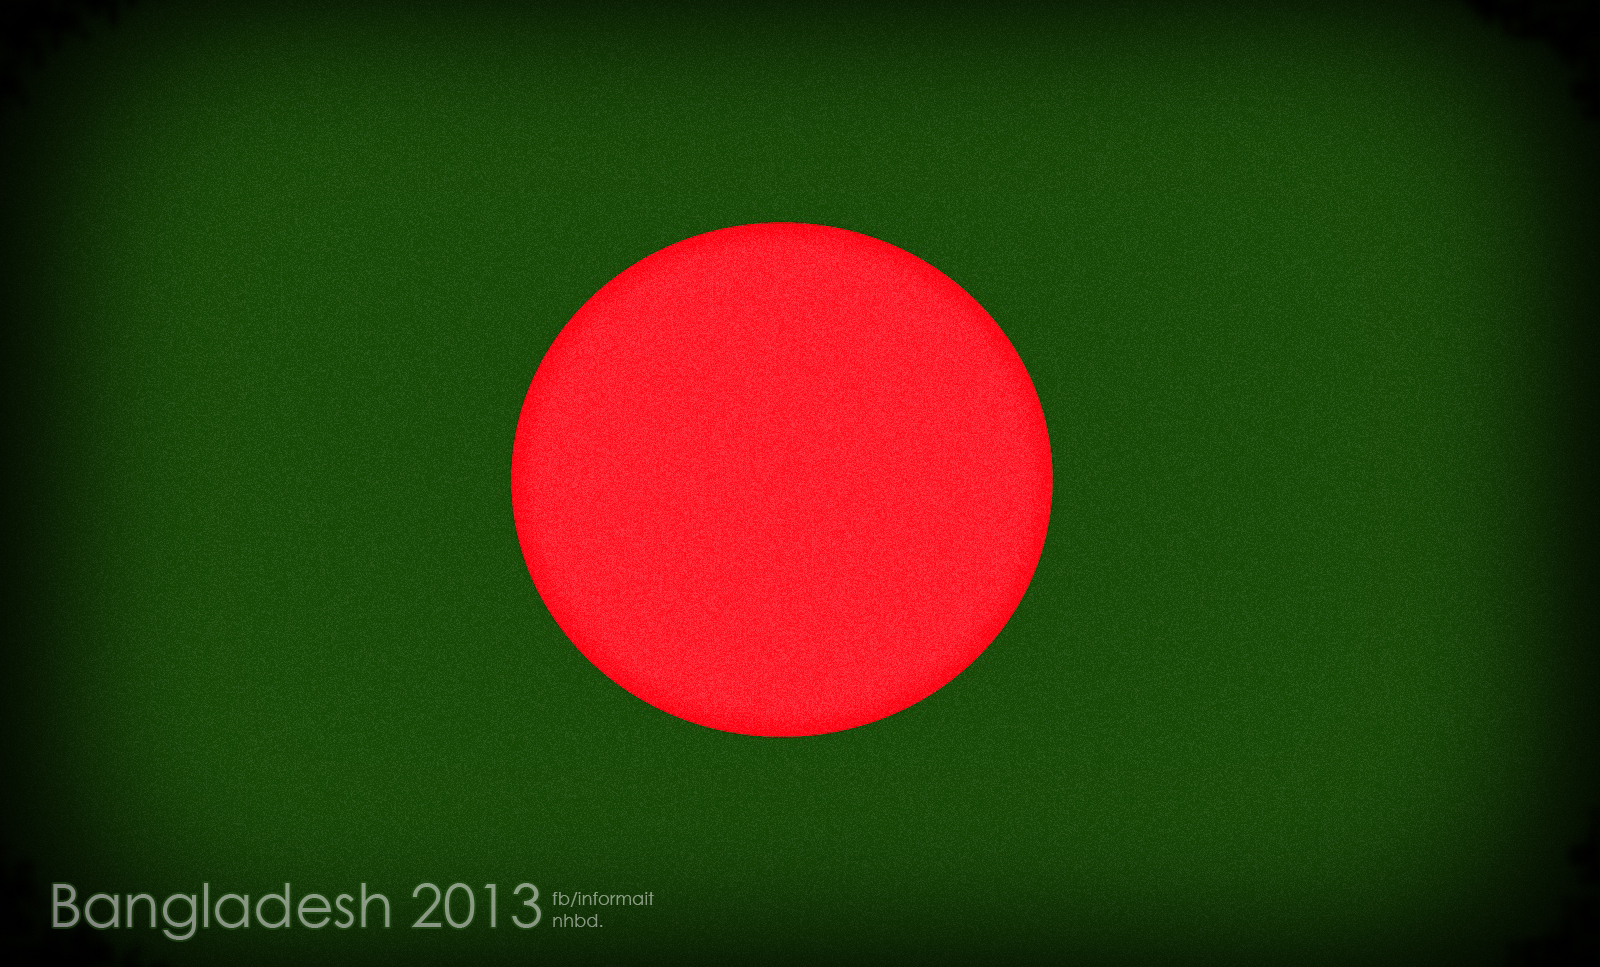 http://1.bp.blogspot.com/-_GM9EB-dK7Q/UMZj3MGUFNI/AAAAAAAAAmM/TqGO0IuwPEw/s1600/Bangladesh%2BFlag%2B2013%2BHD%2BWallpaper.jpg